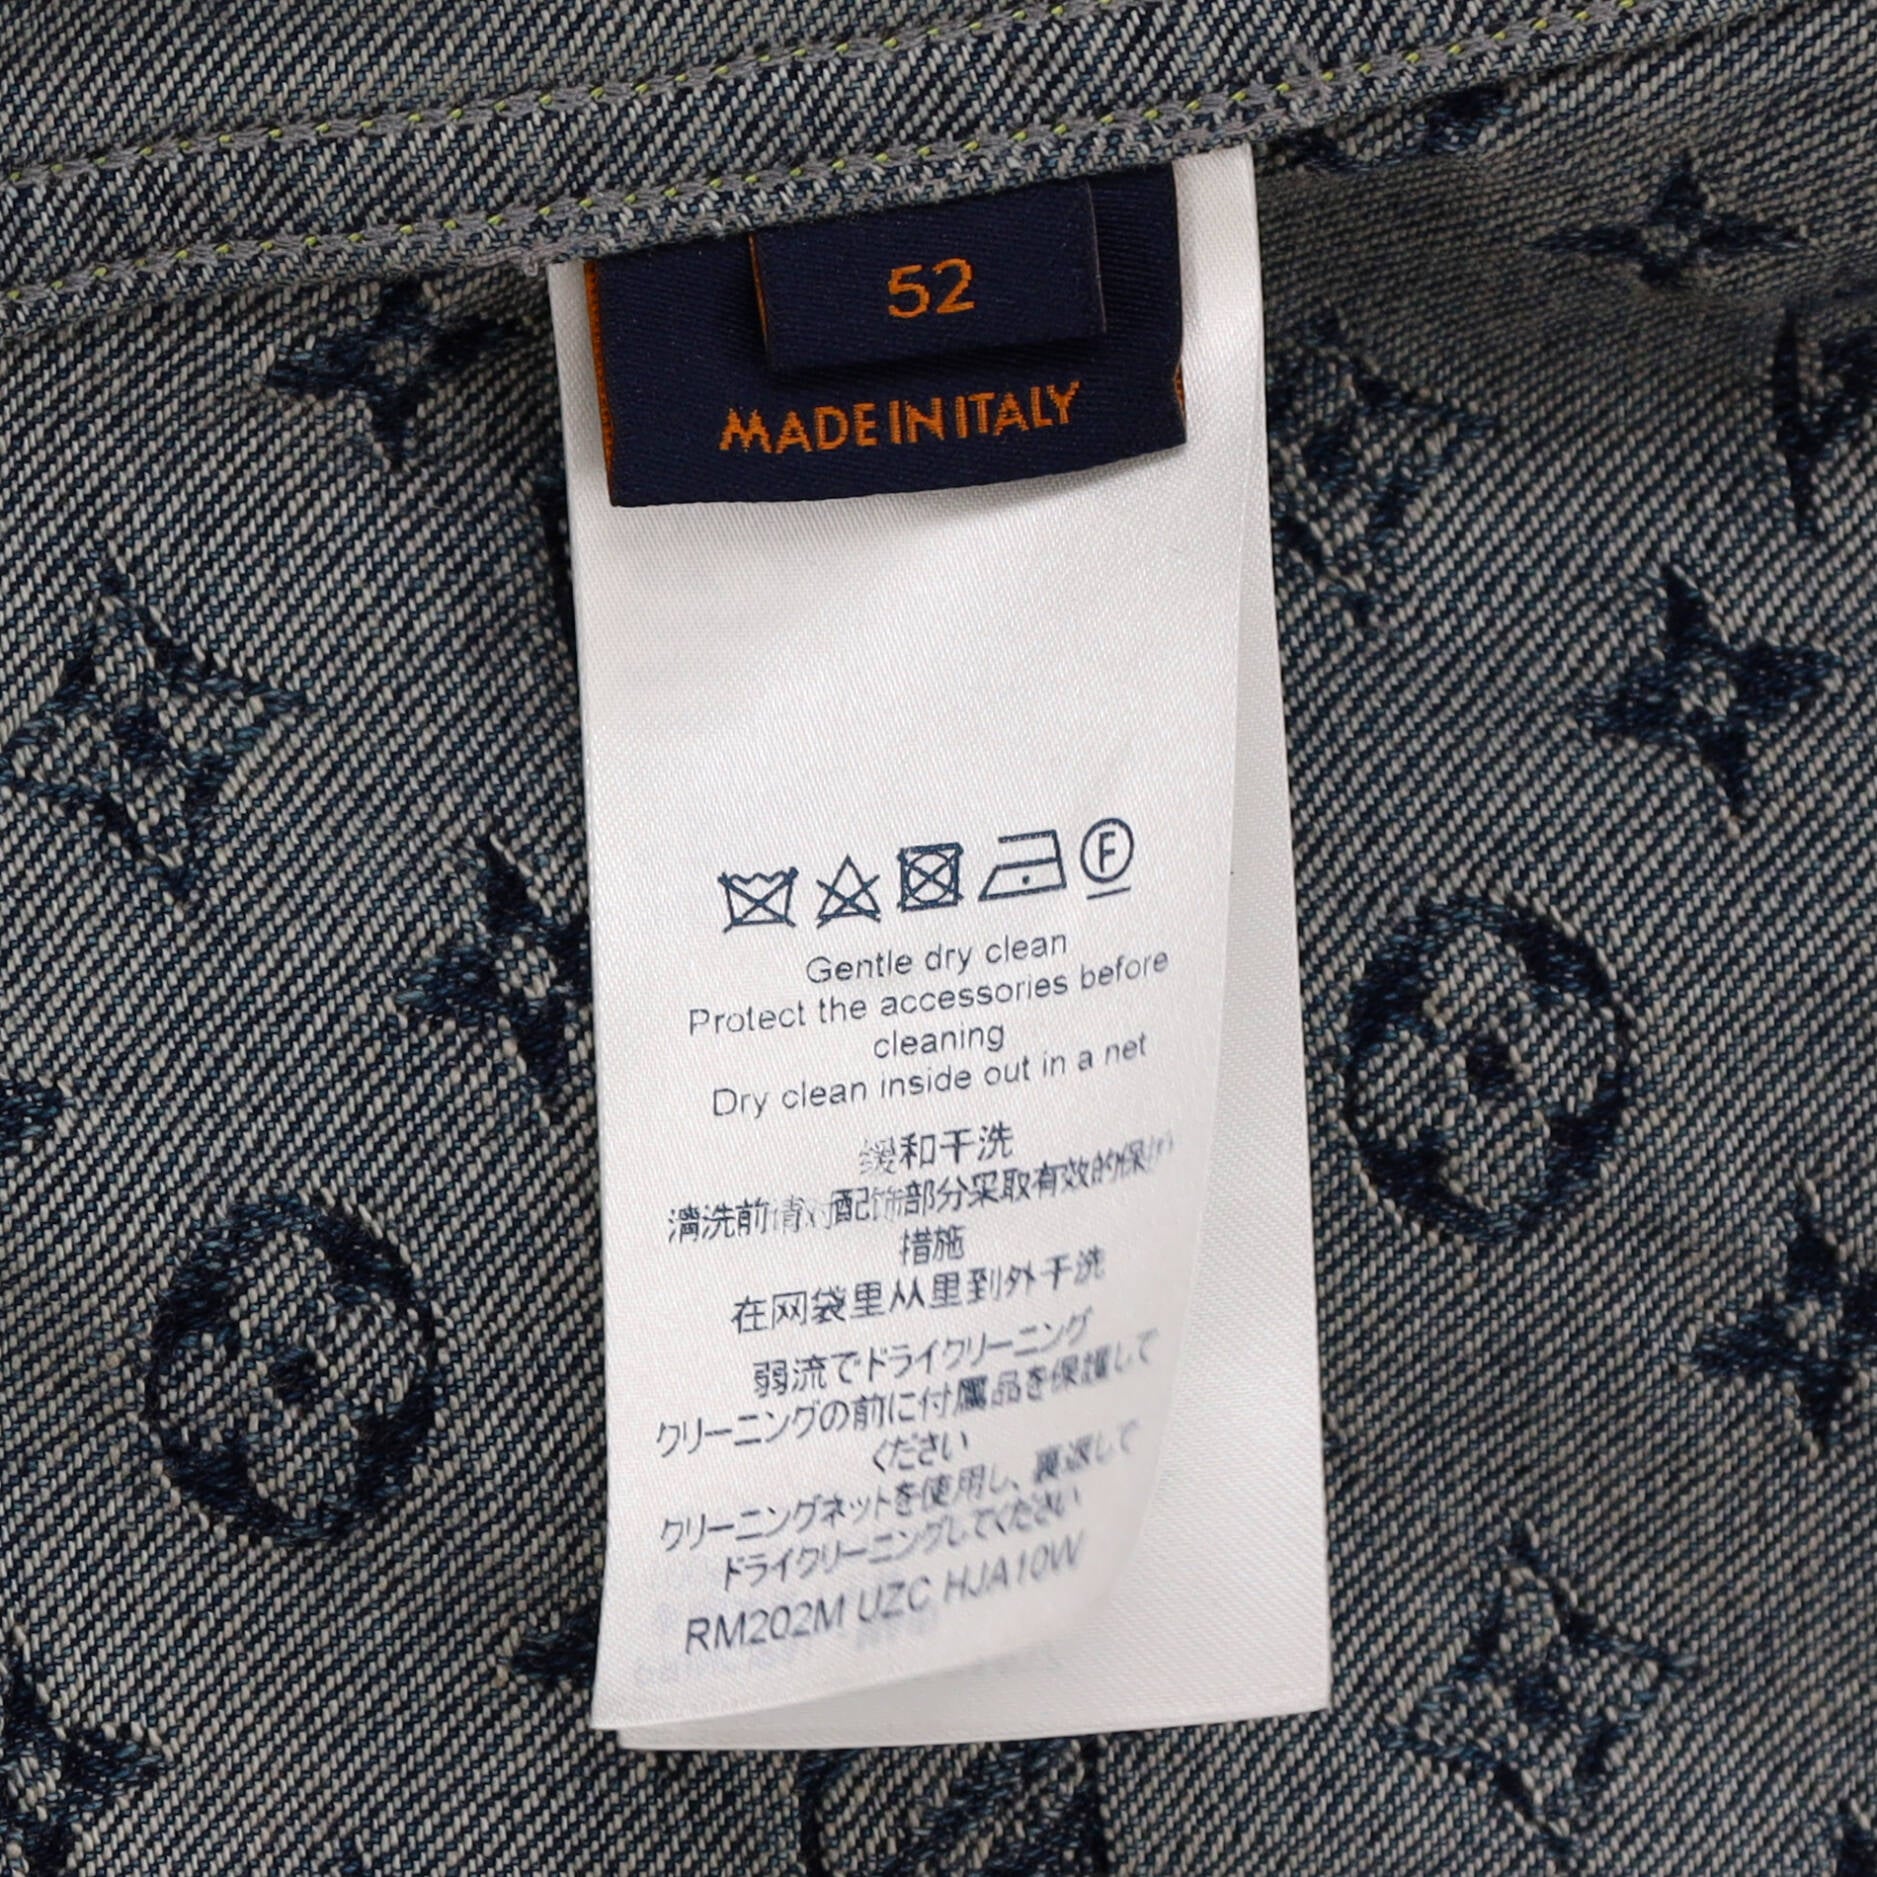 Louis Vuitton Monogram Waves Giant Damier Flannel Shirt